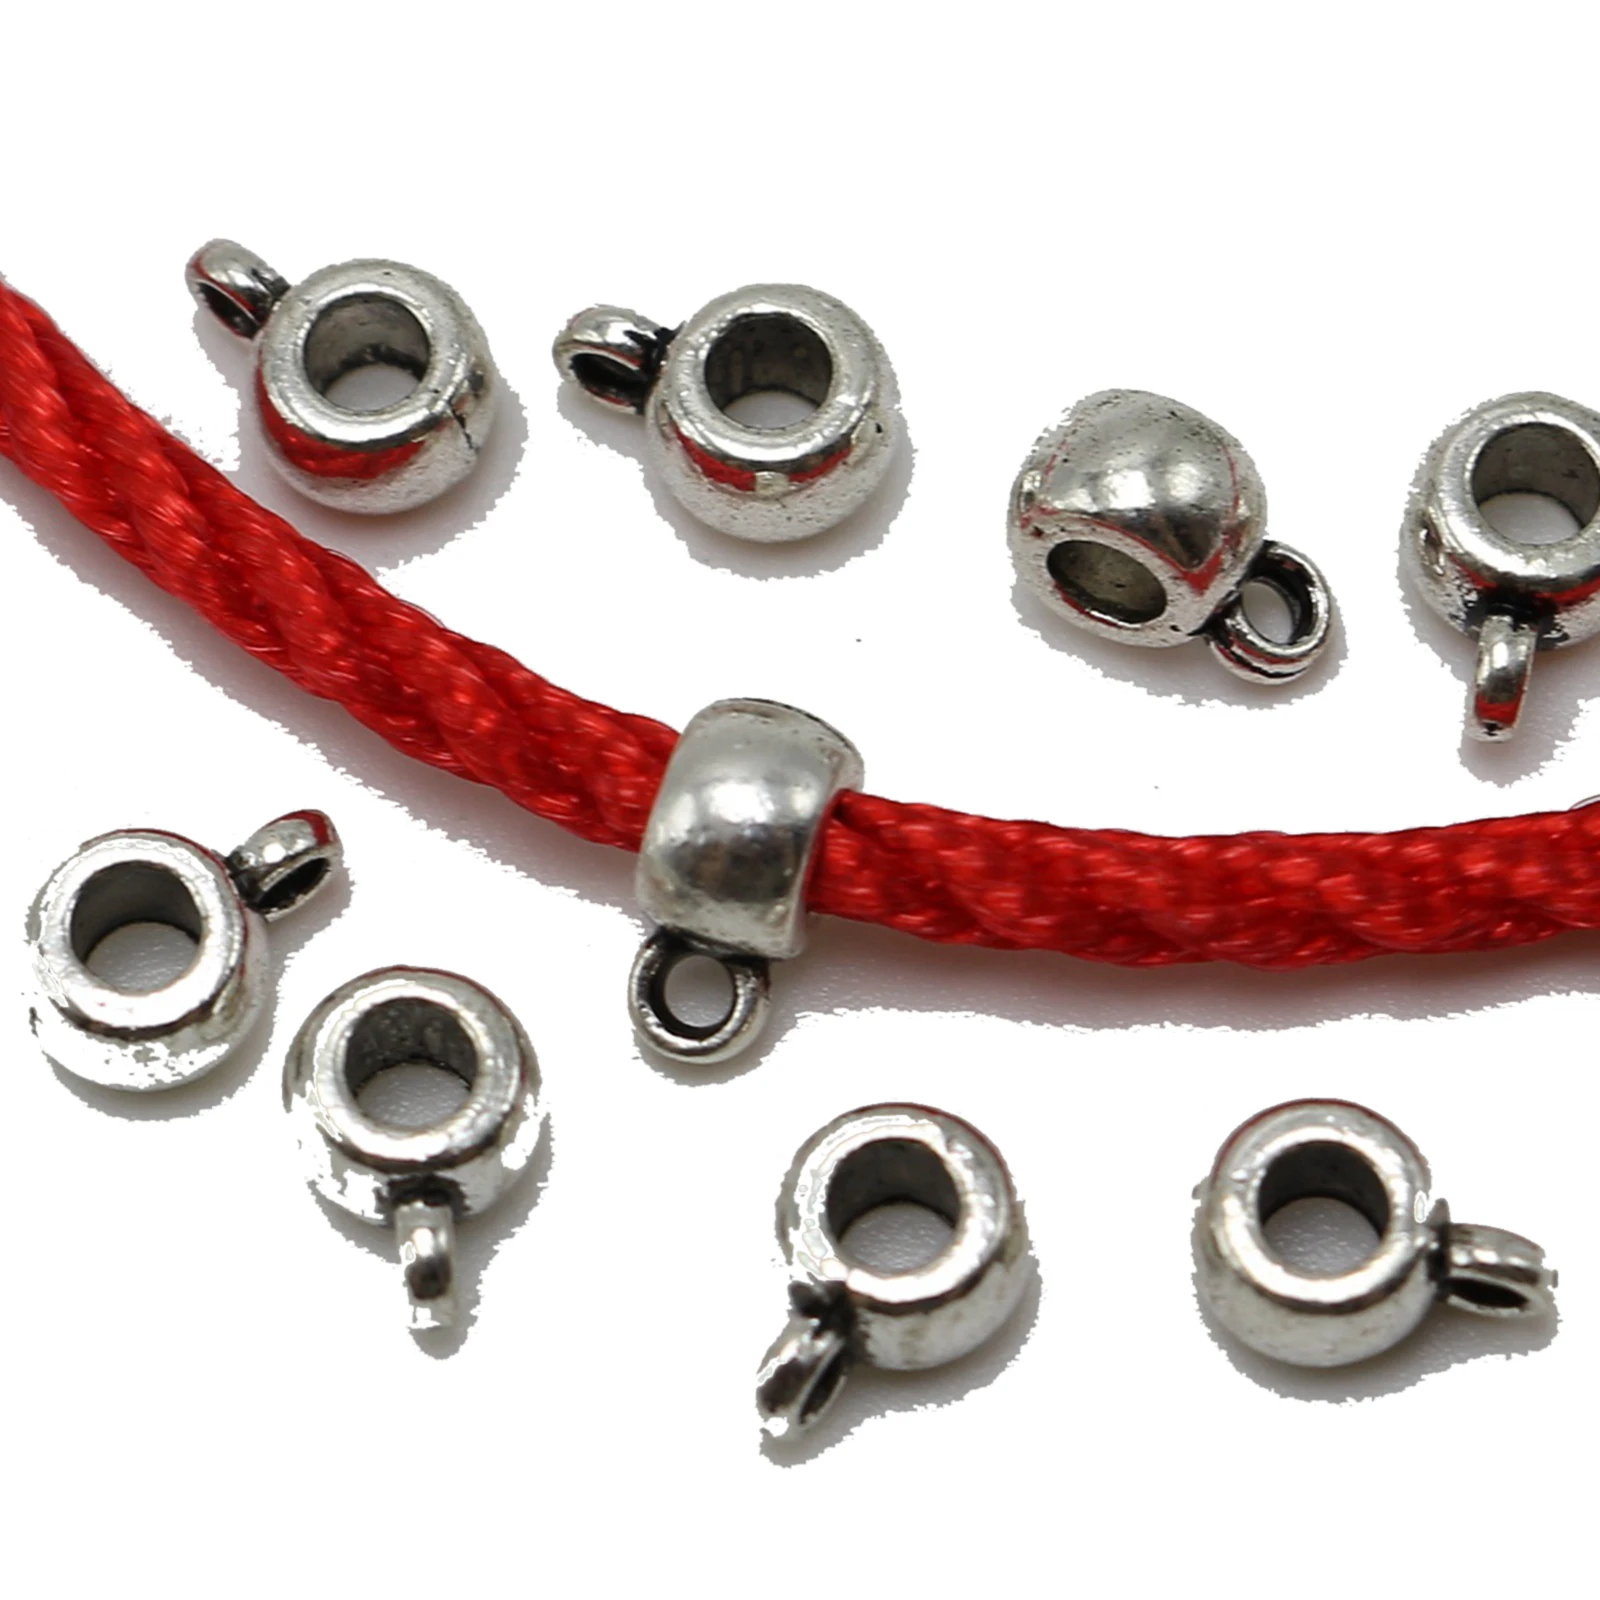 

25 Tibetan Silver Smooth Bails 12X8mm Charm Beads Craft Pendant Hanger Links